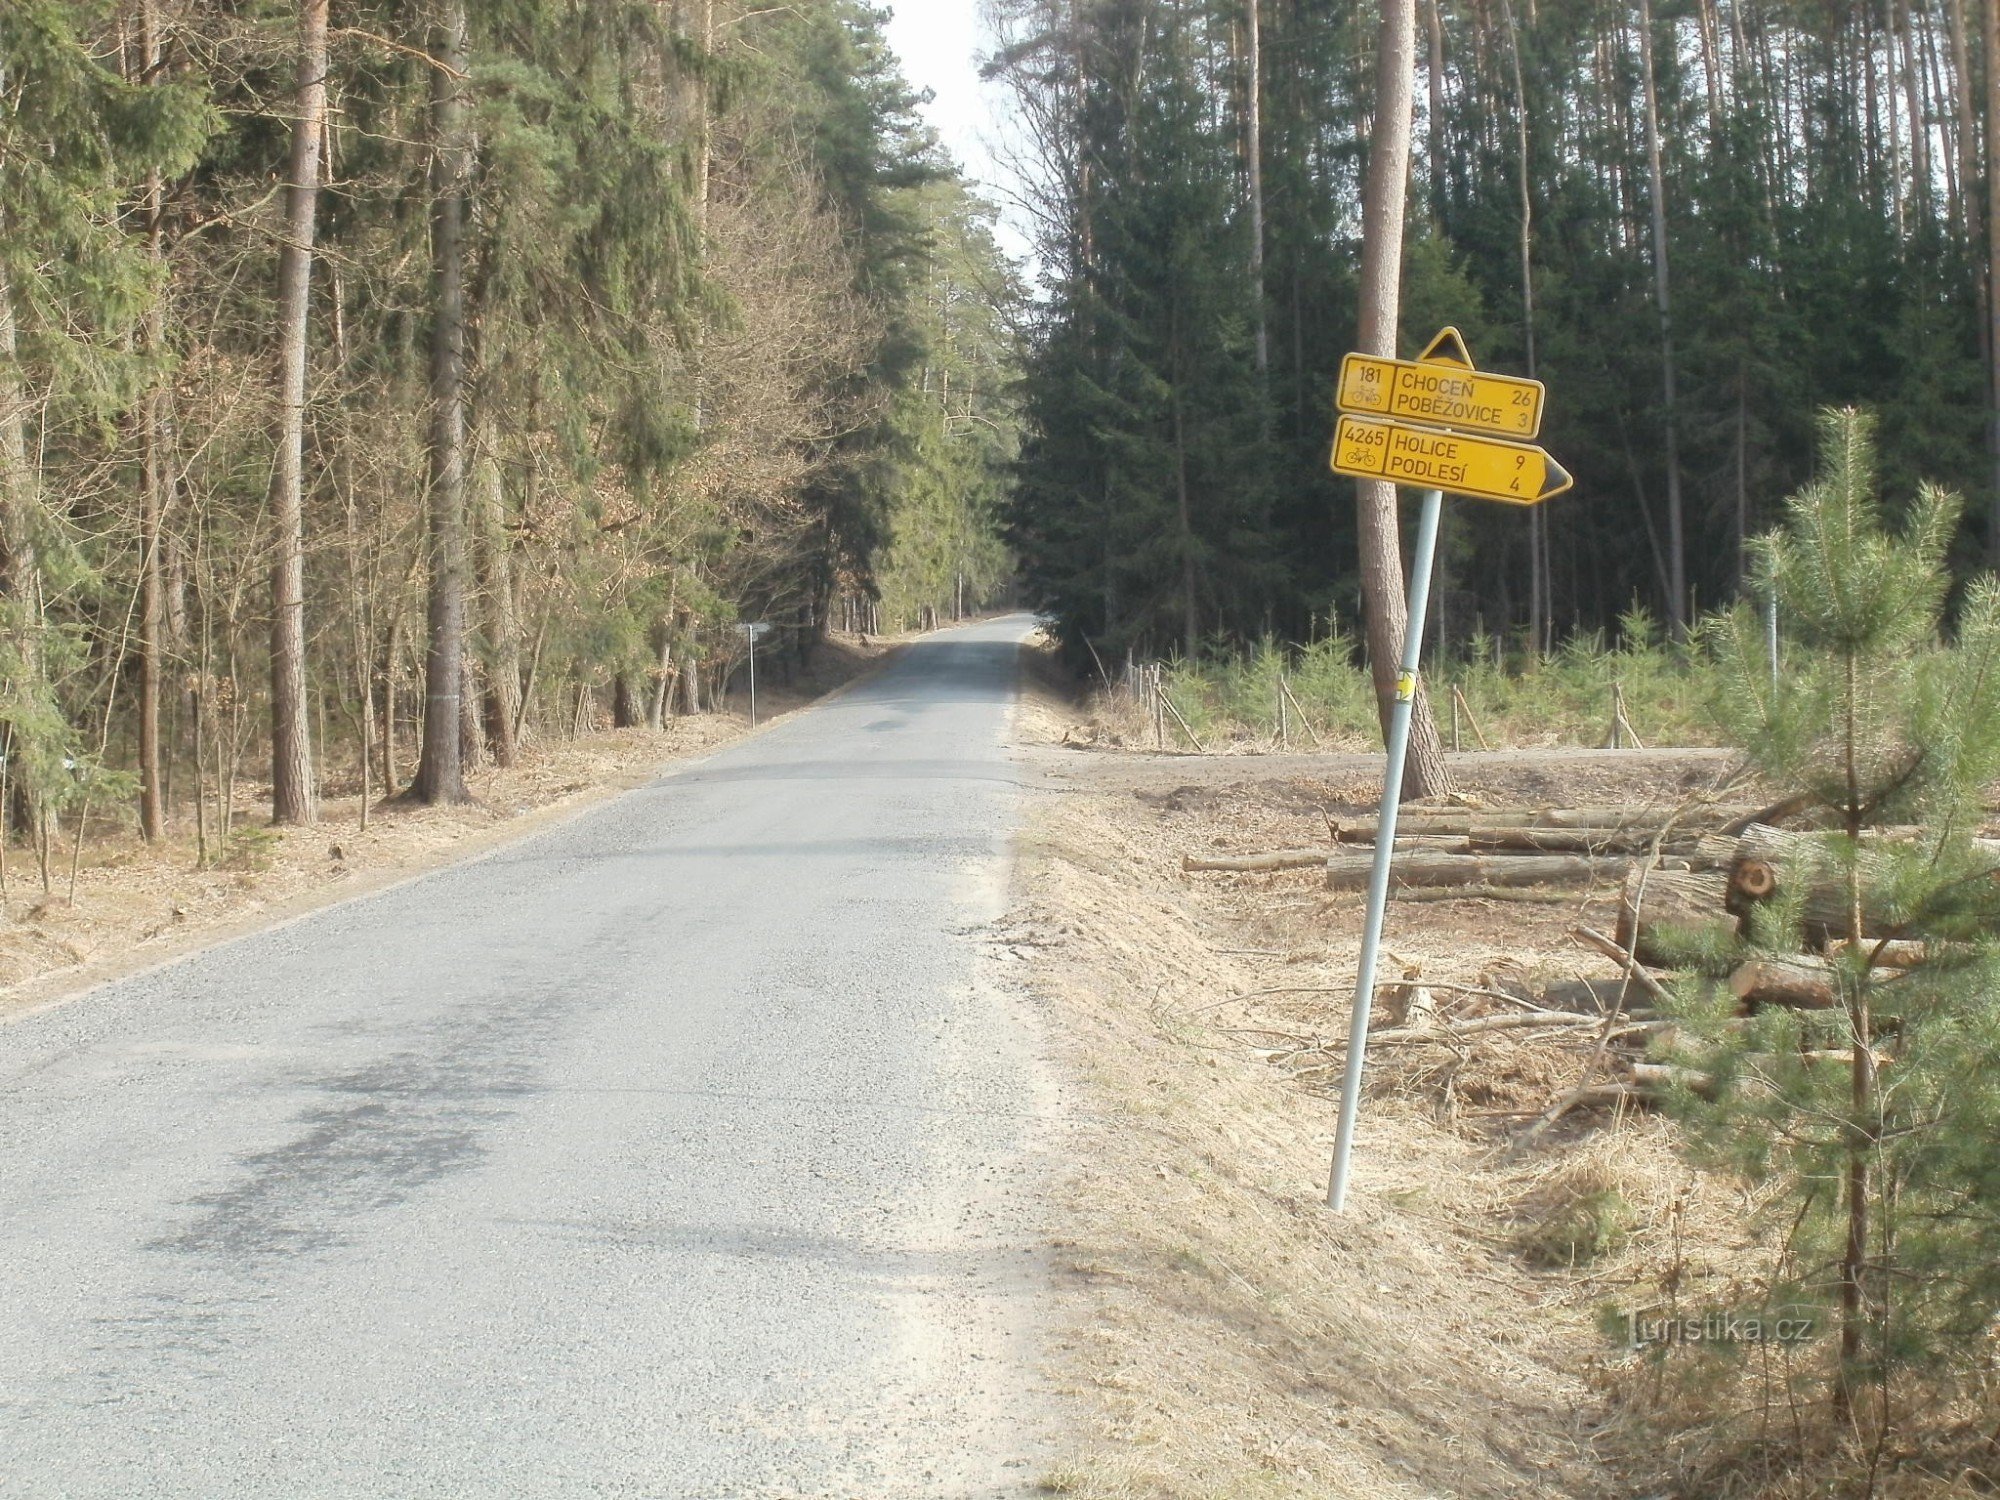 cycling junction at the park near Vysoké Chvojno